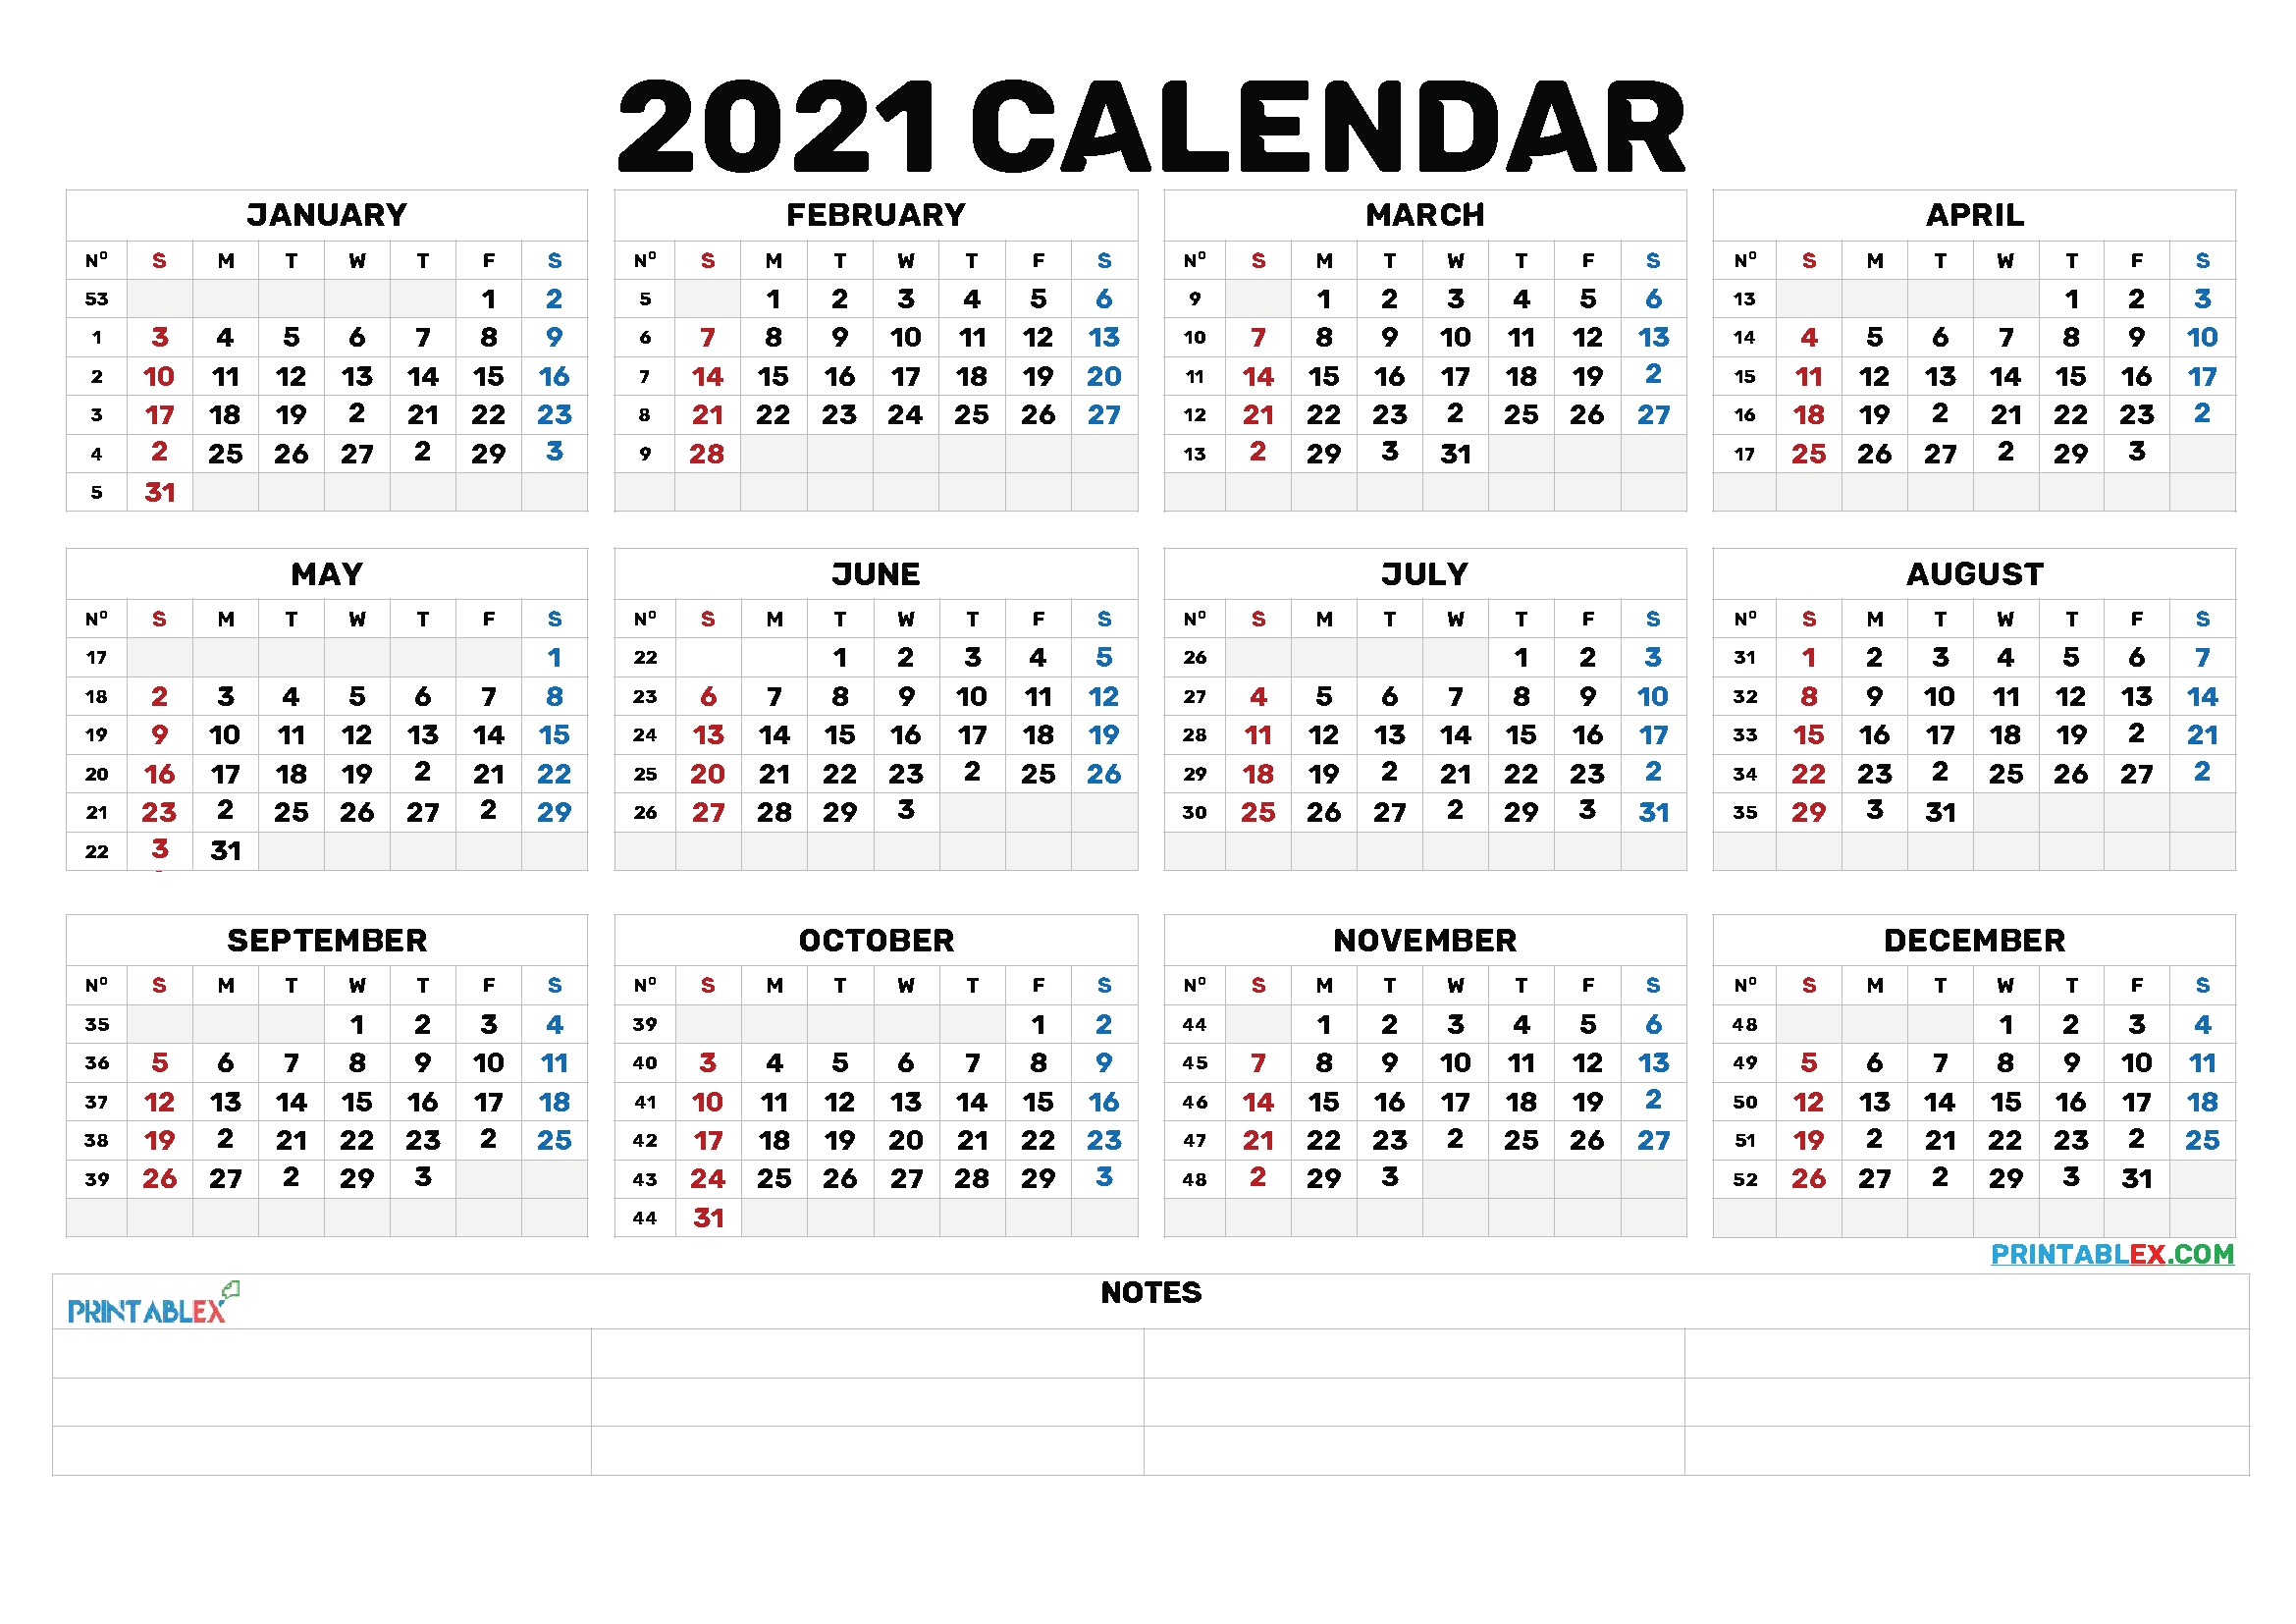 2021 Annual Calendar | Printable Calendars 2021